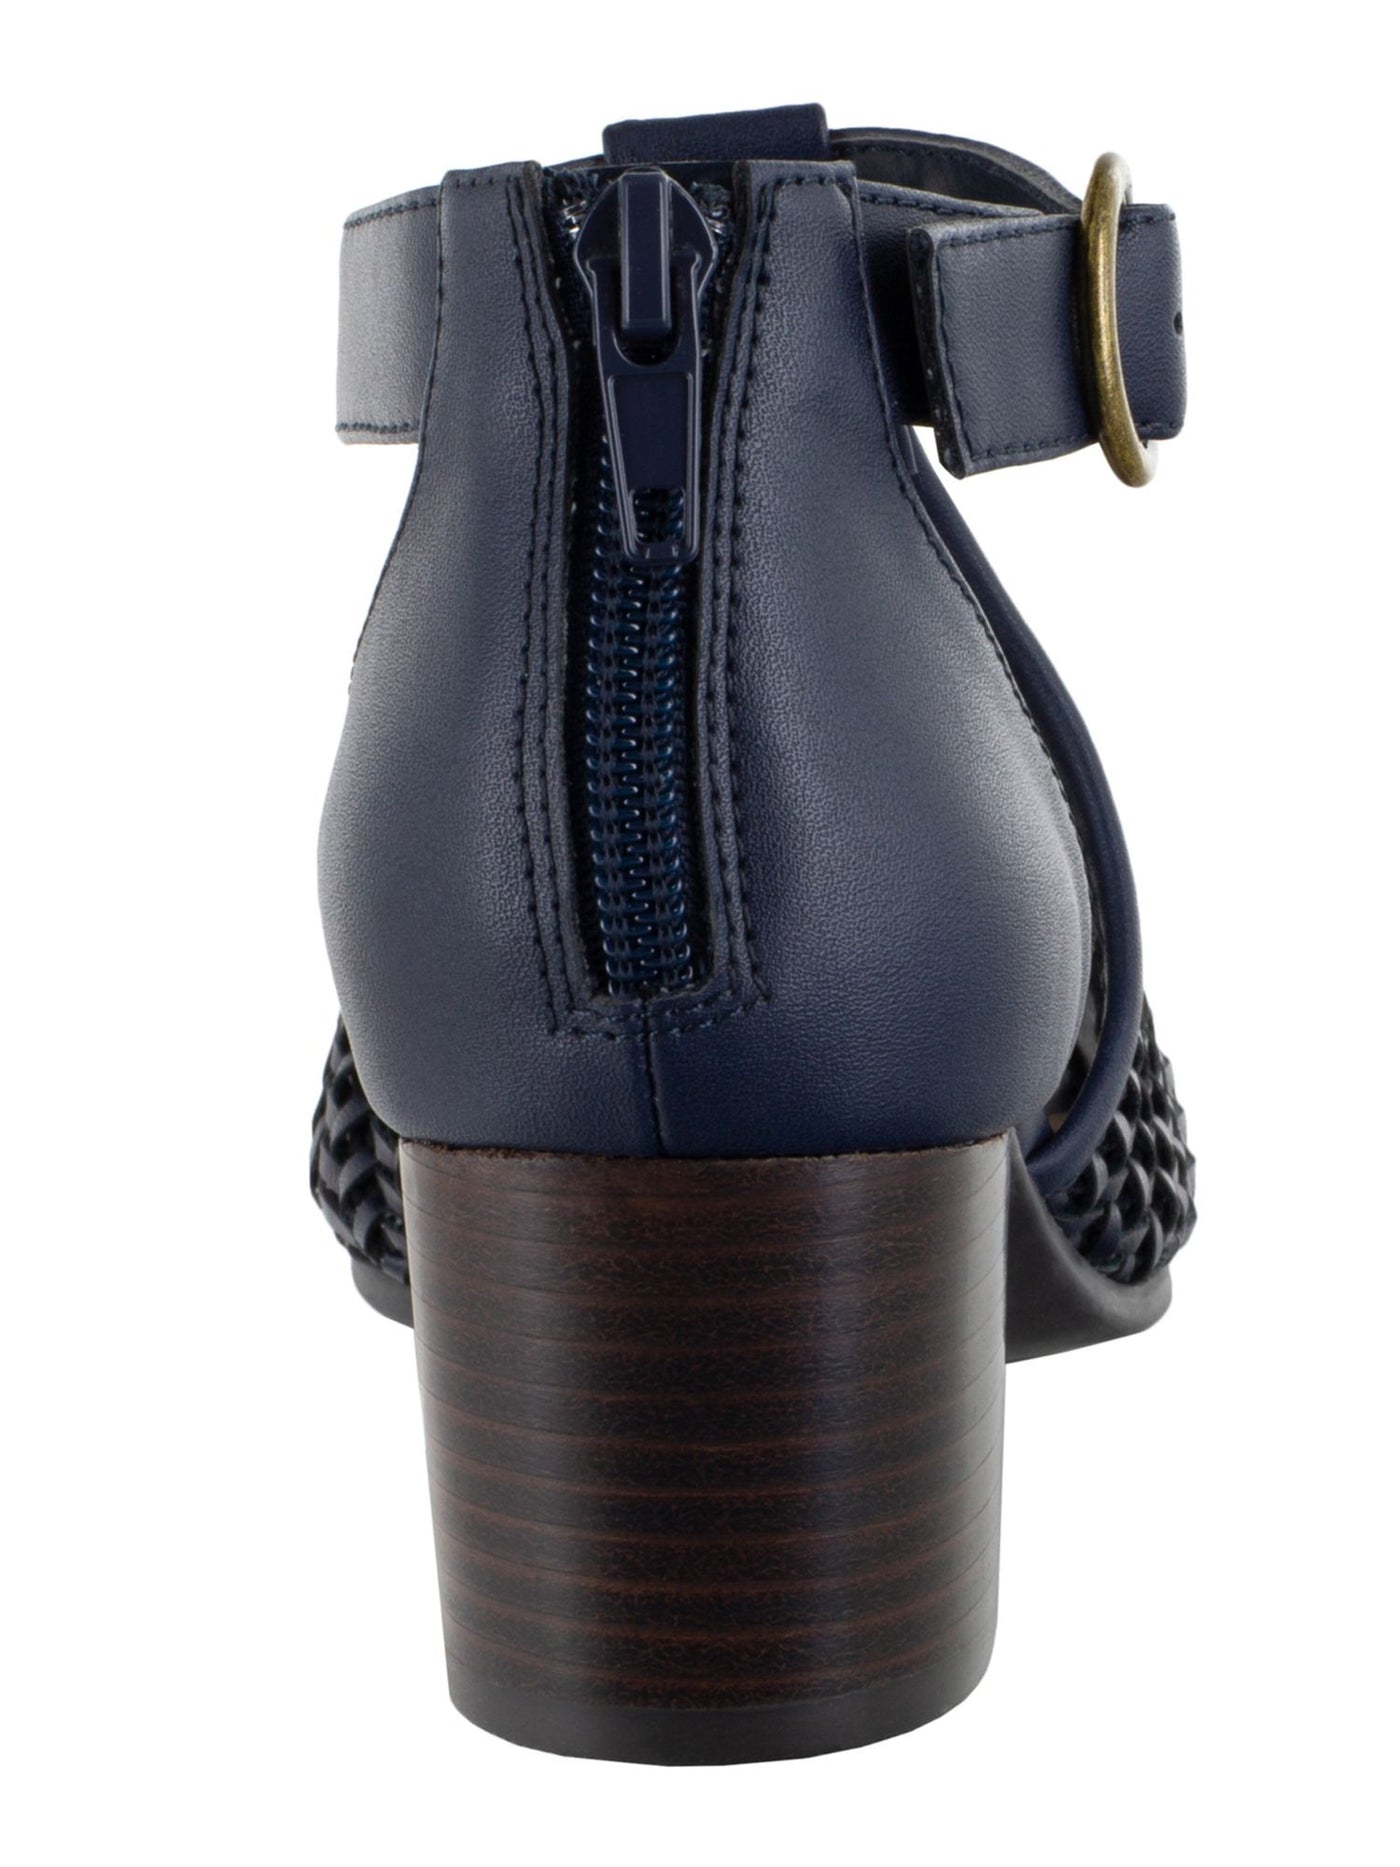 BELLA VITA Womens Navy Slip Resistant Woven Adjustable Cushioned Ripley Ii Round Toe Block Heel Zip-Up Sandals Shoes 6.5